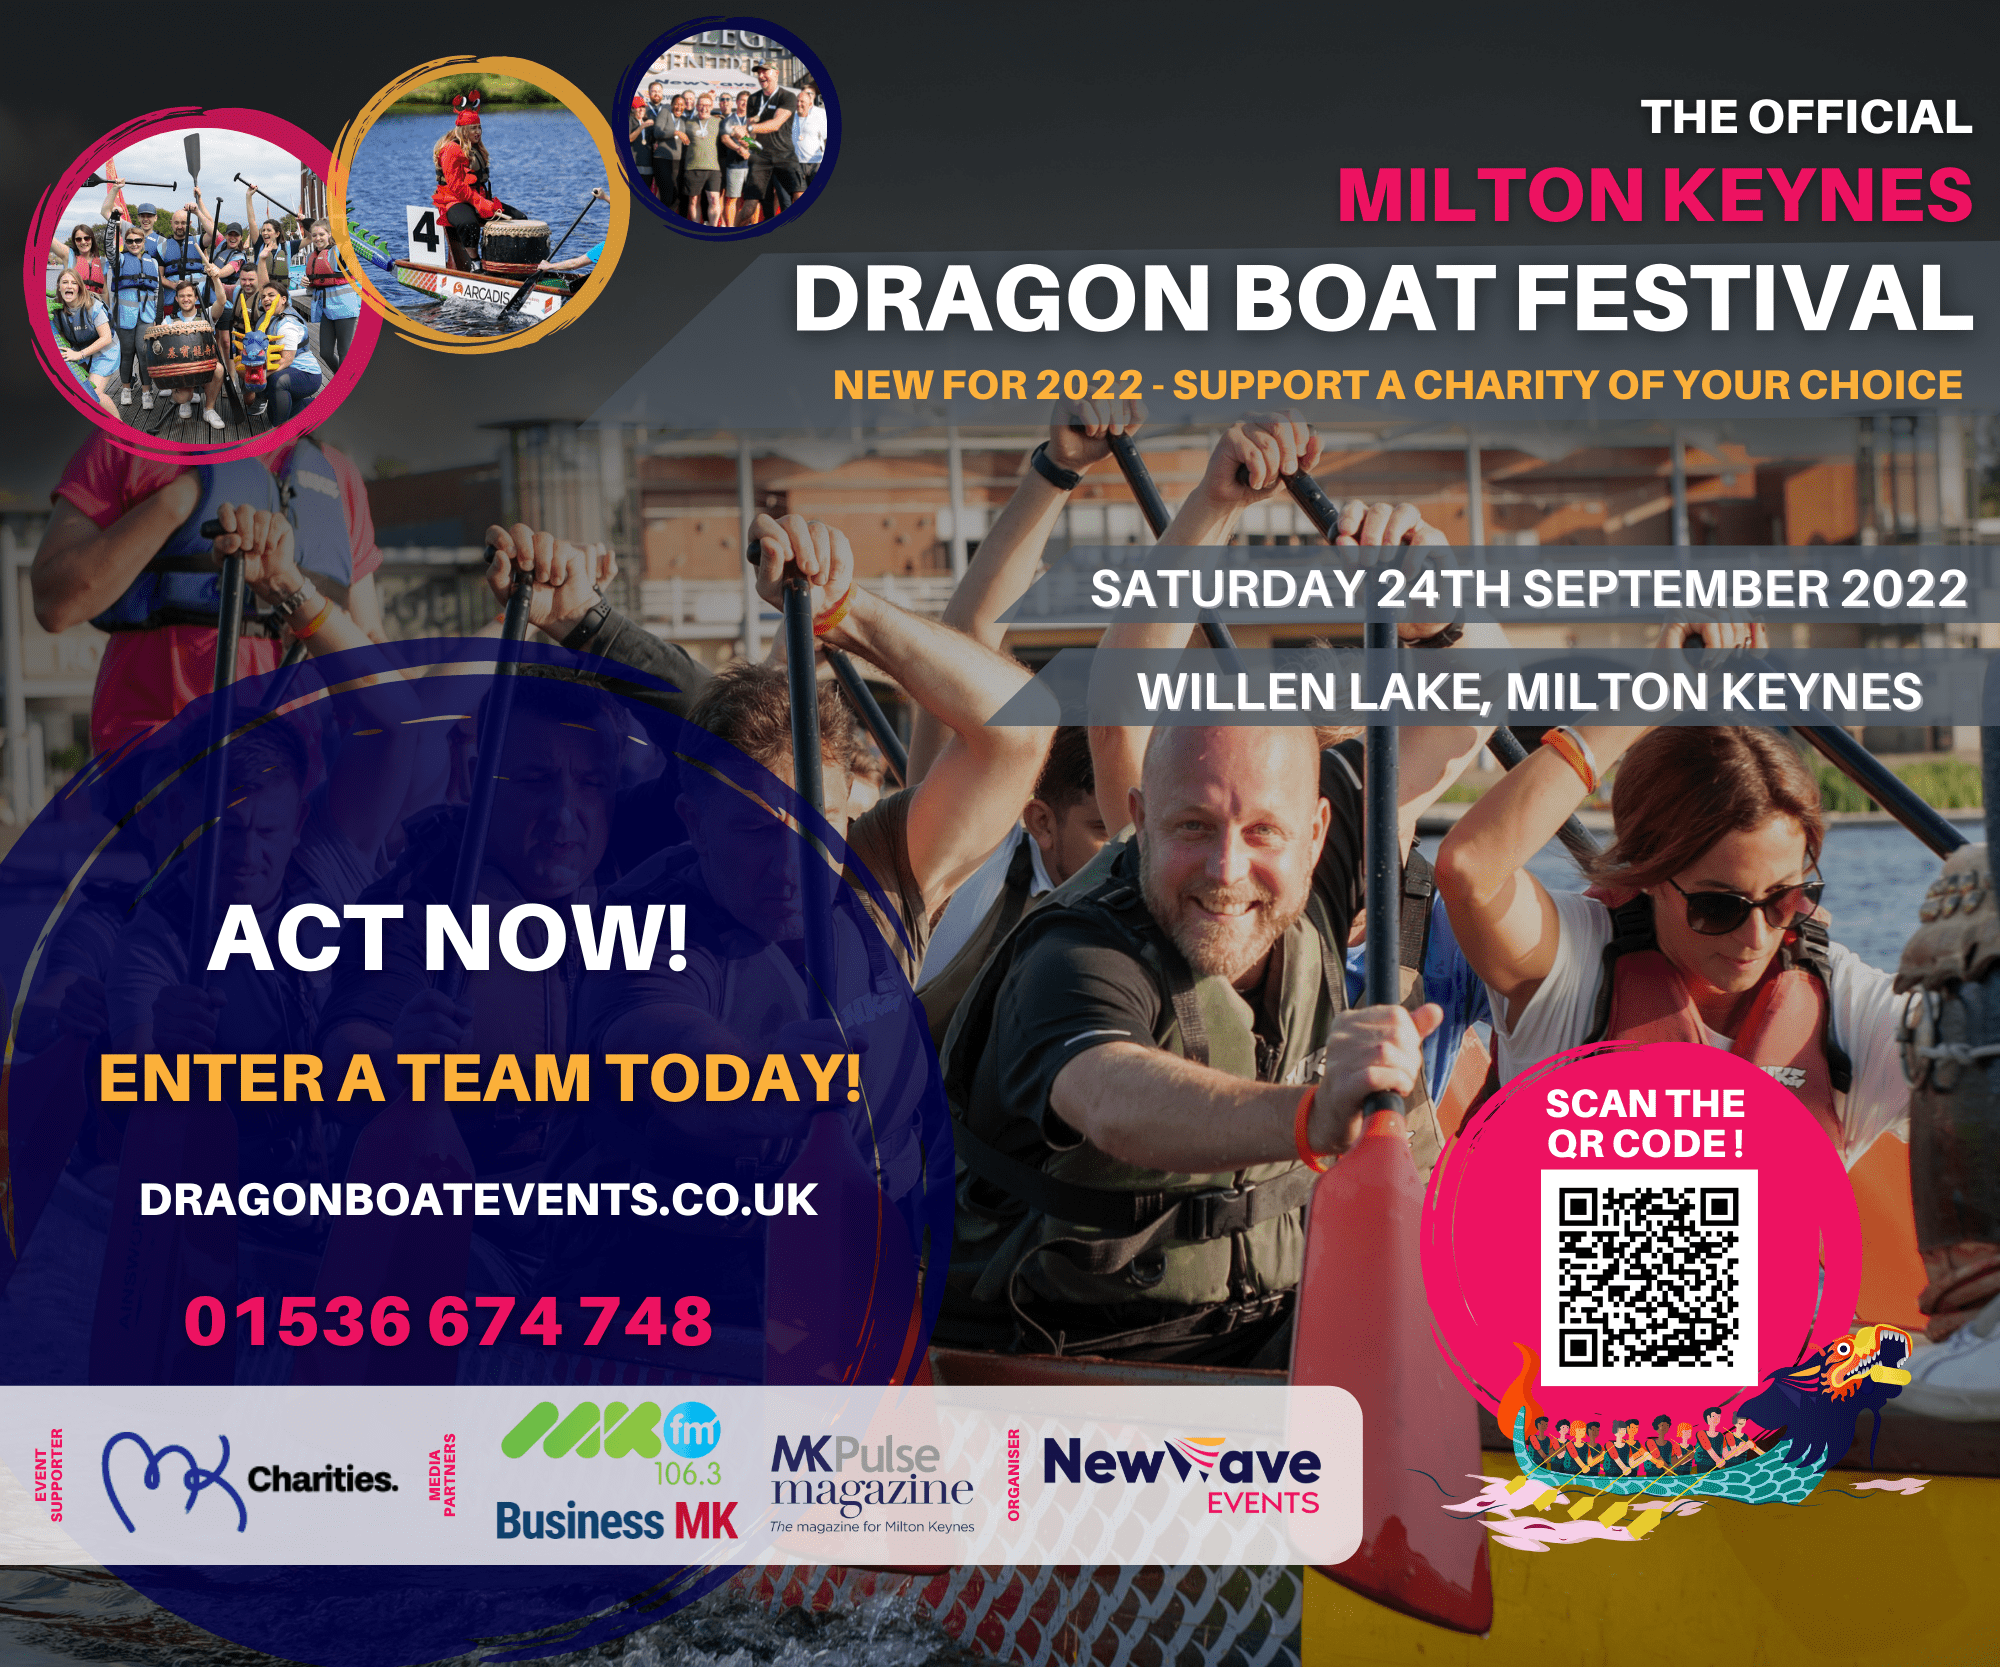 The Official Milton Keynes Dragon Boat Festival Top Image